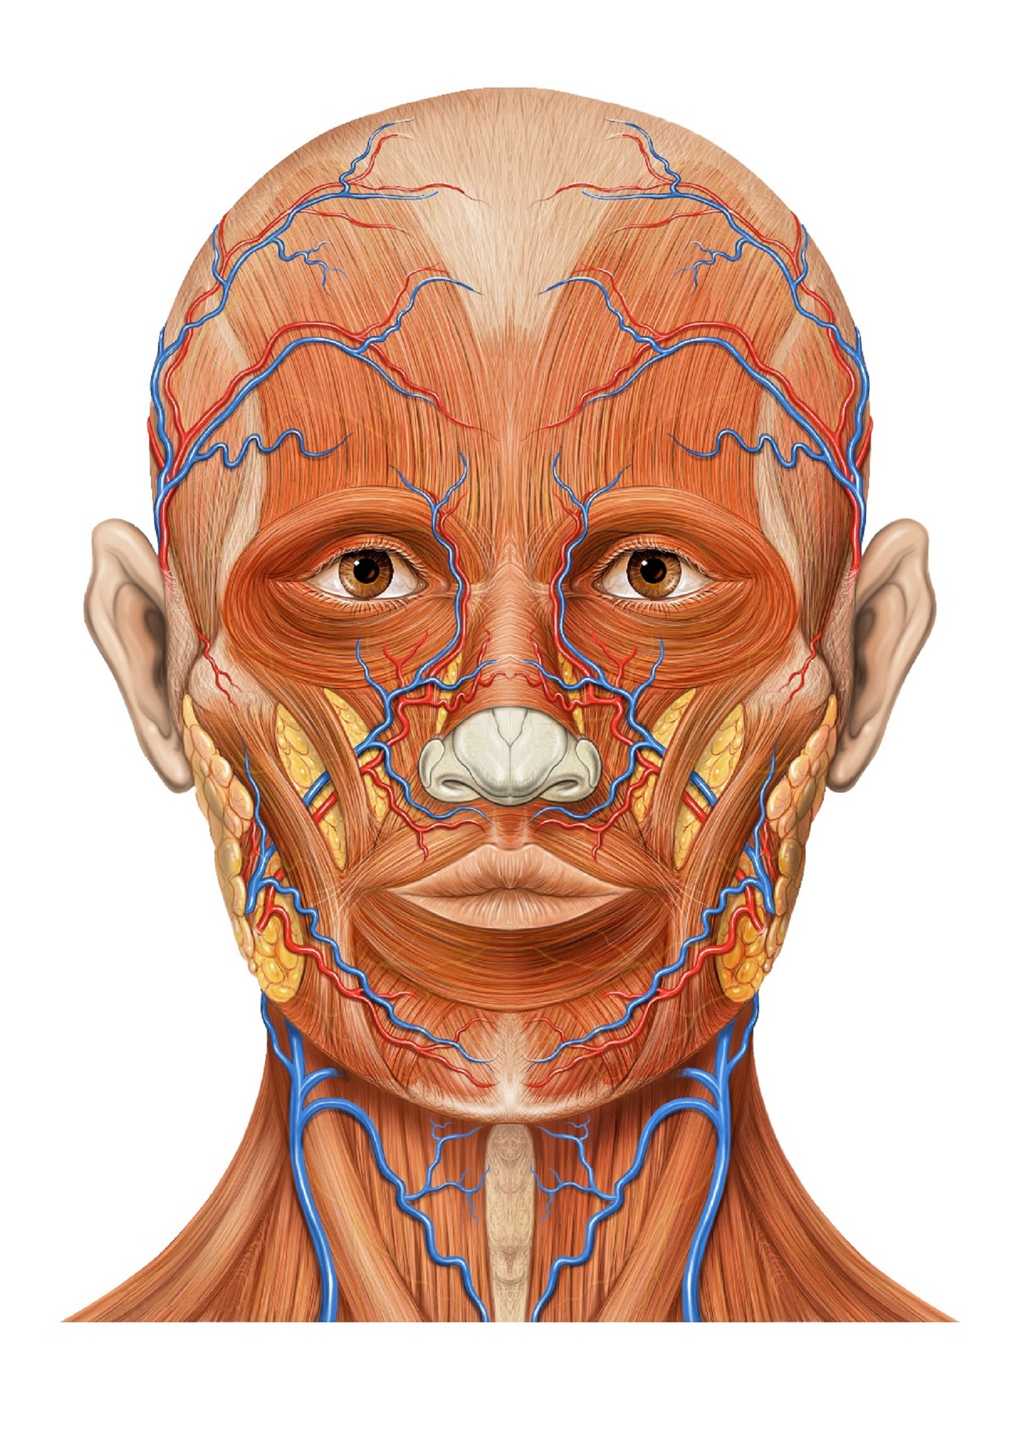 Anatomie du visage. © Patrick J. Lynch medical illustrator, CC by 2.5